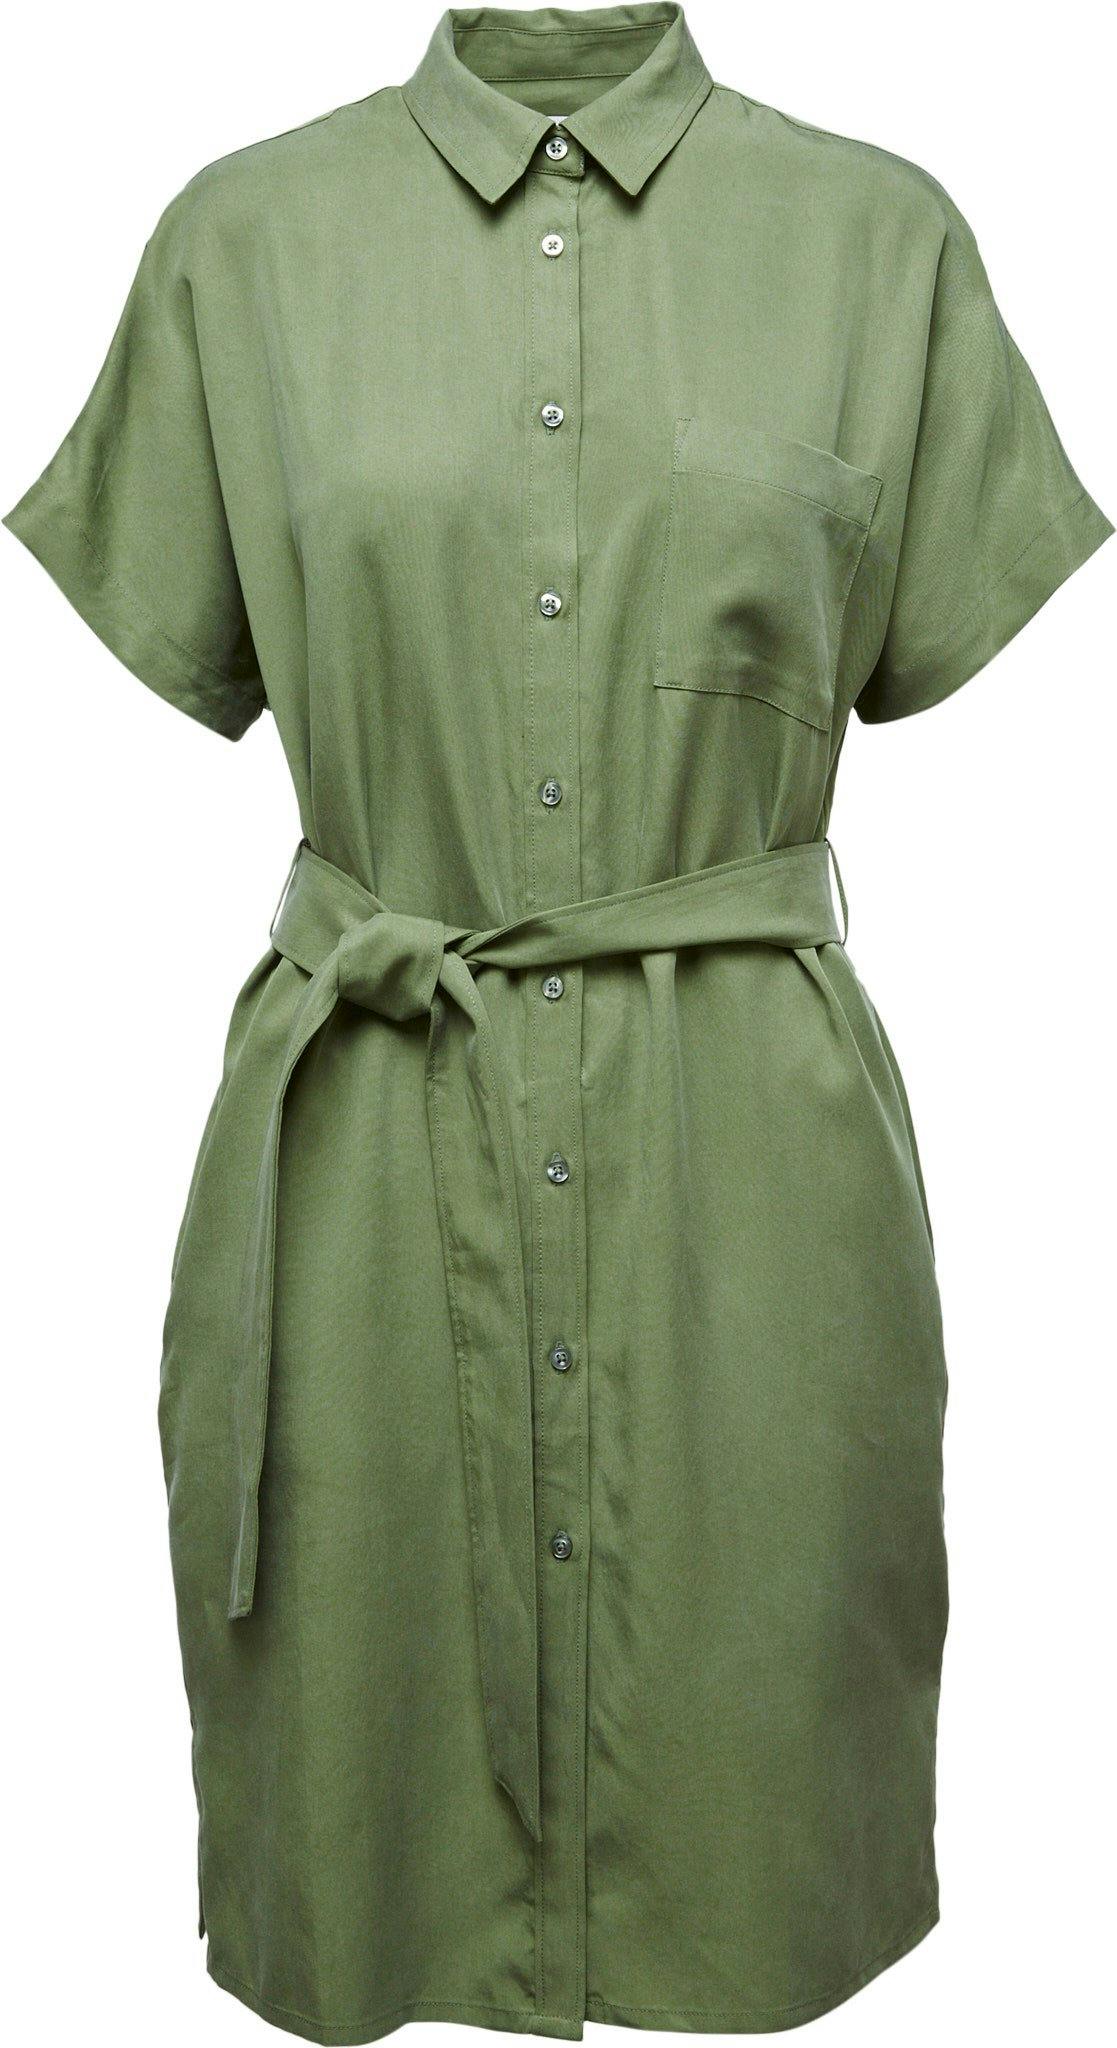 Product image for Lavapies Shirt Dress - Women's